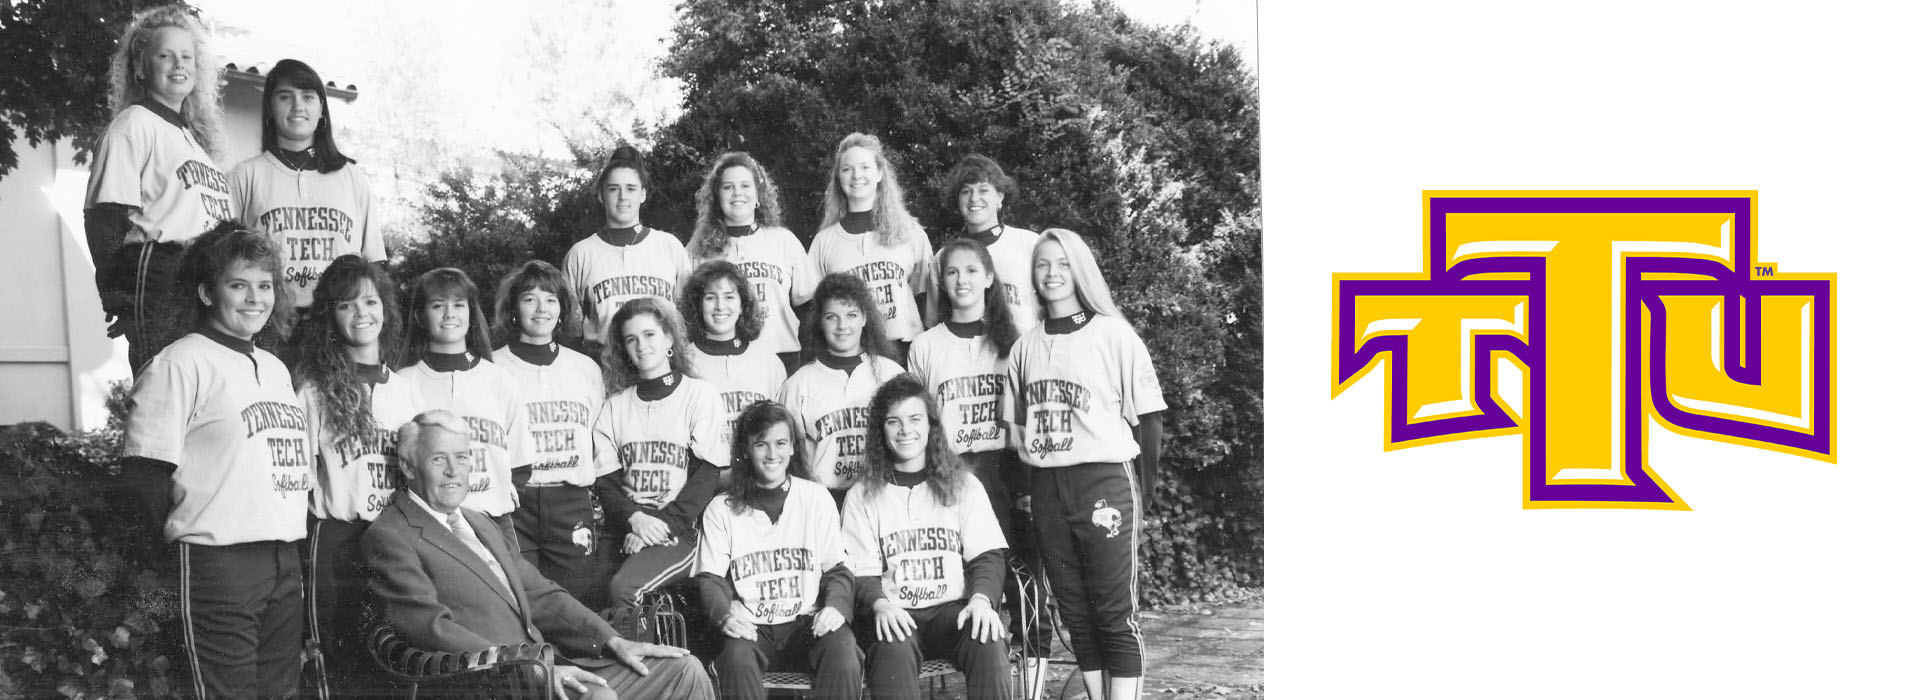 1994 Golden Eagle softball team to be honored during UT Martin doubleheader